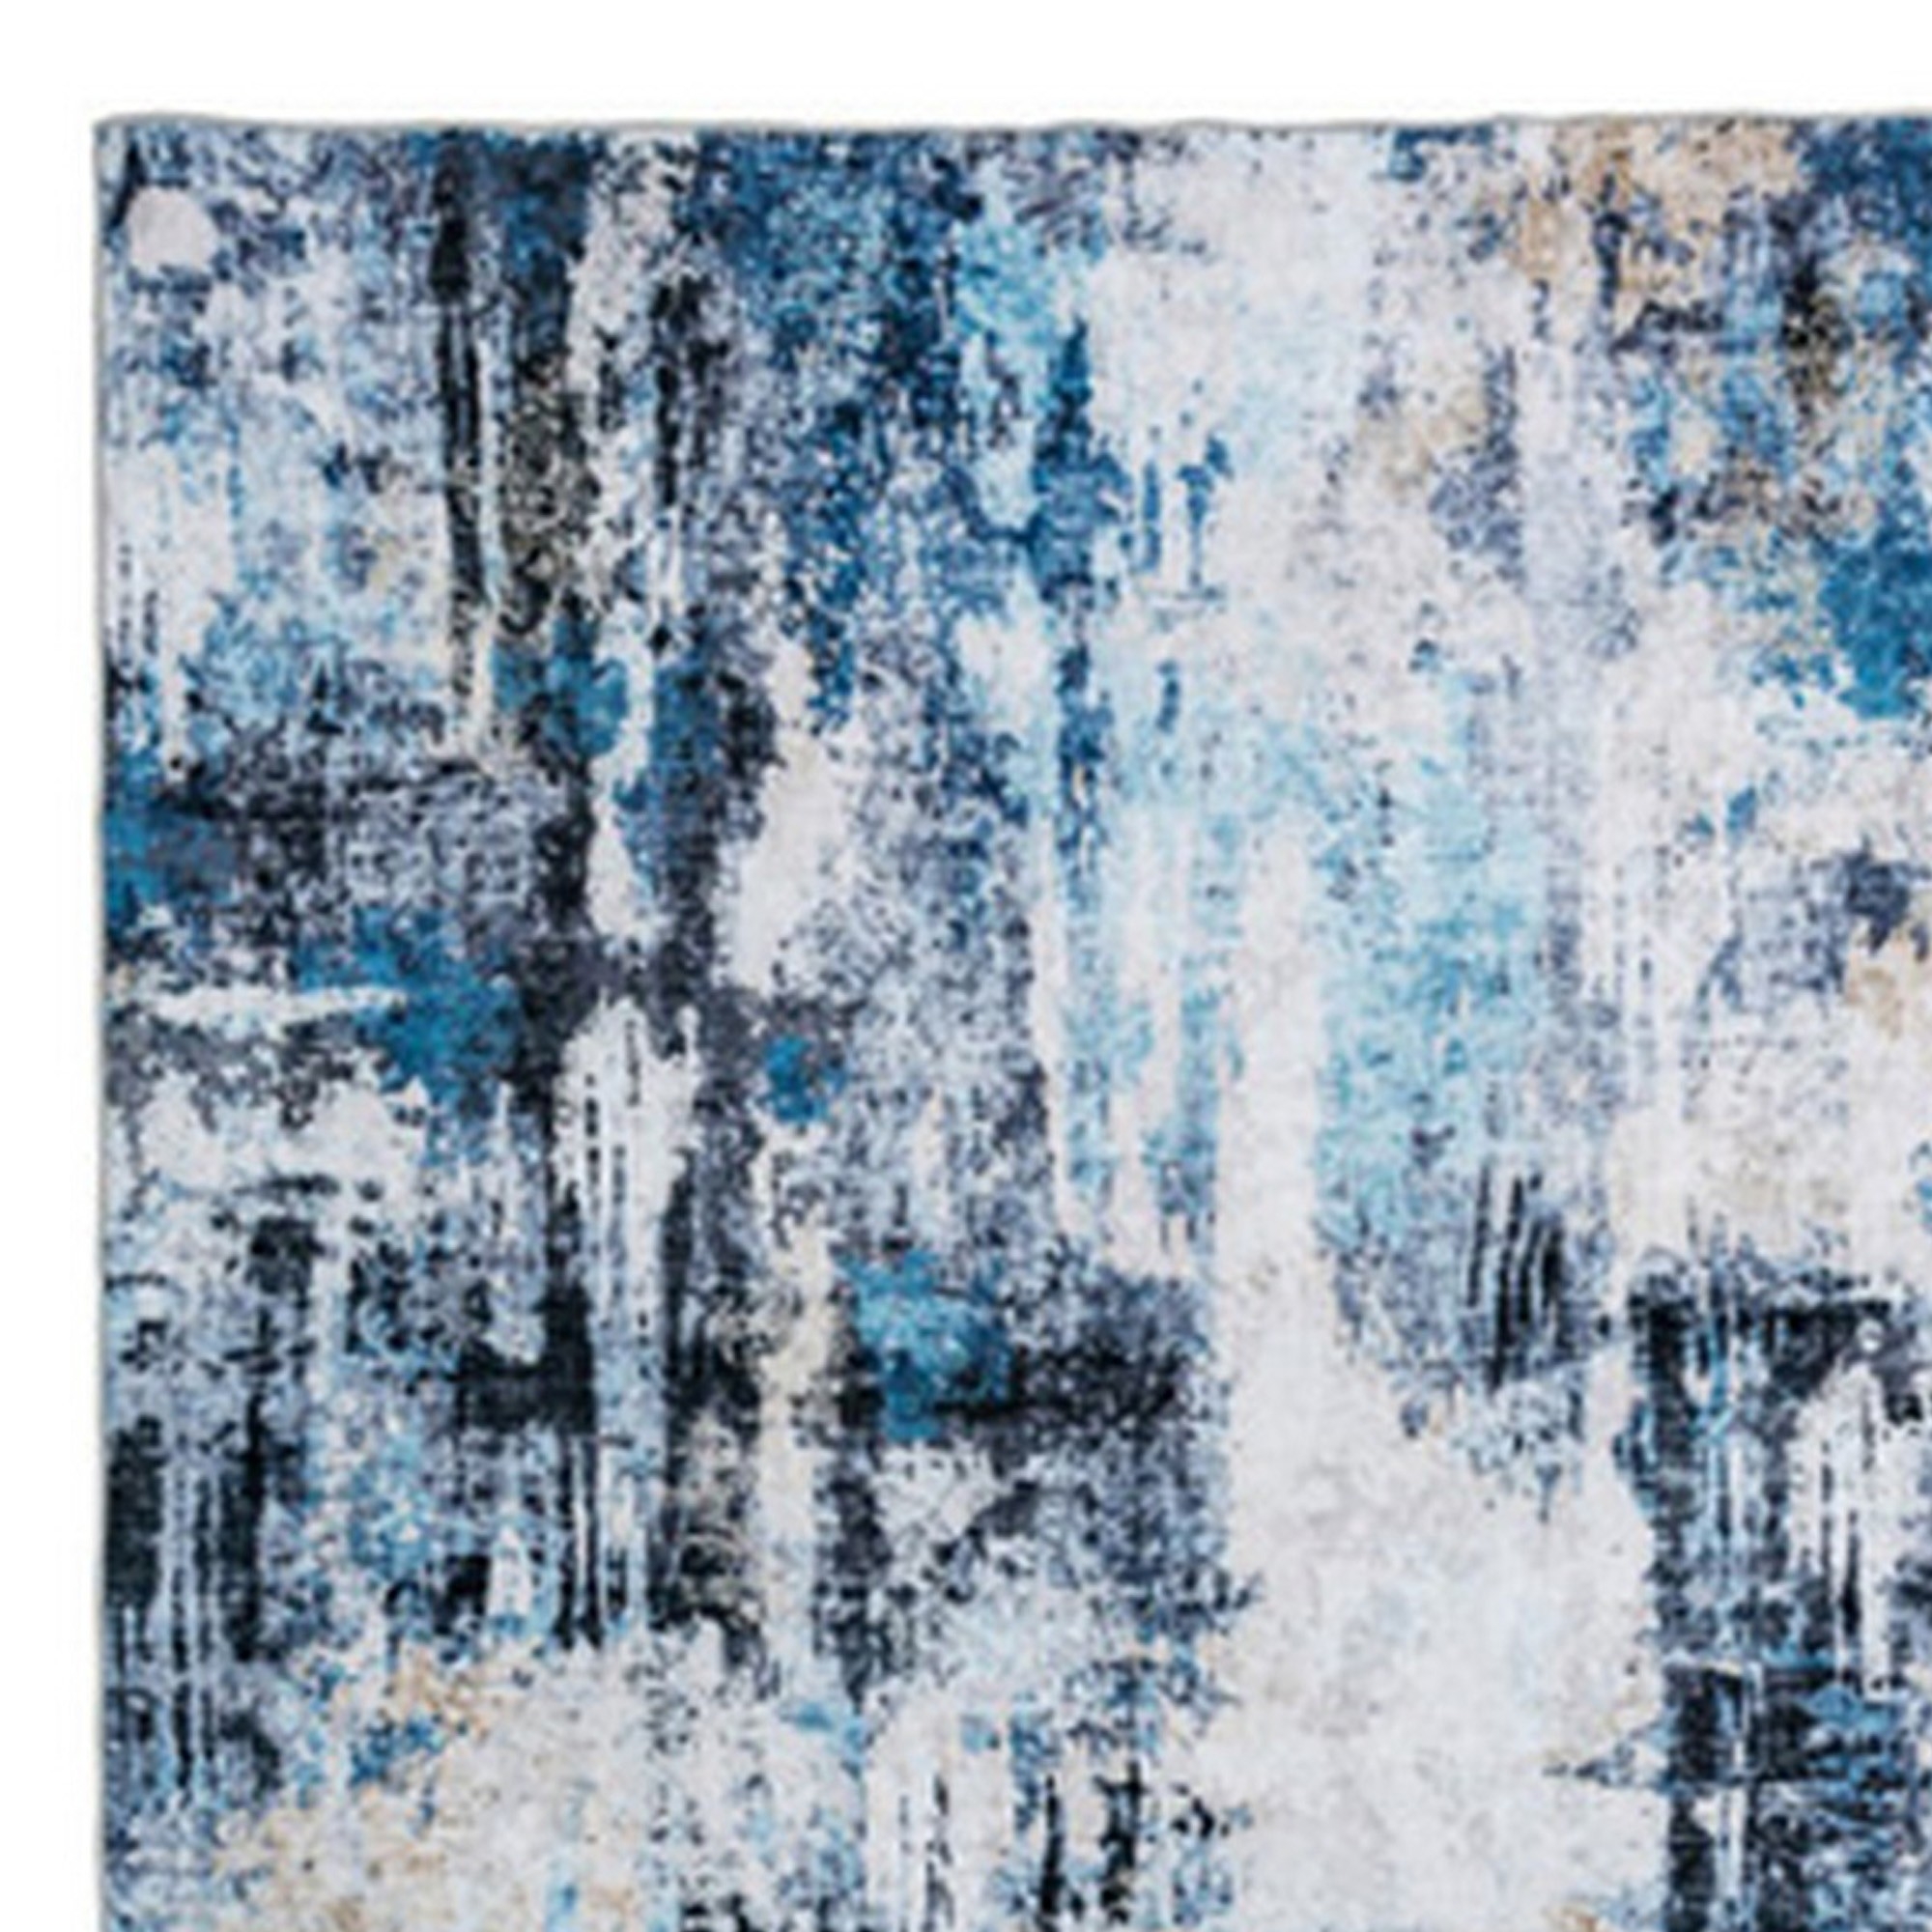 Rue 7 X 5 Medium Soft Fabric Floor Area Rug, Washable, Abstract Blue And White Design- Saltoro Sherpi